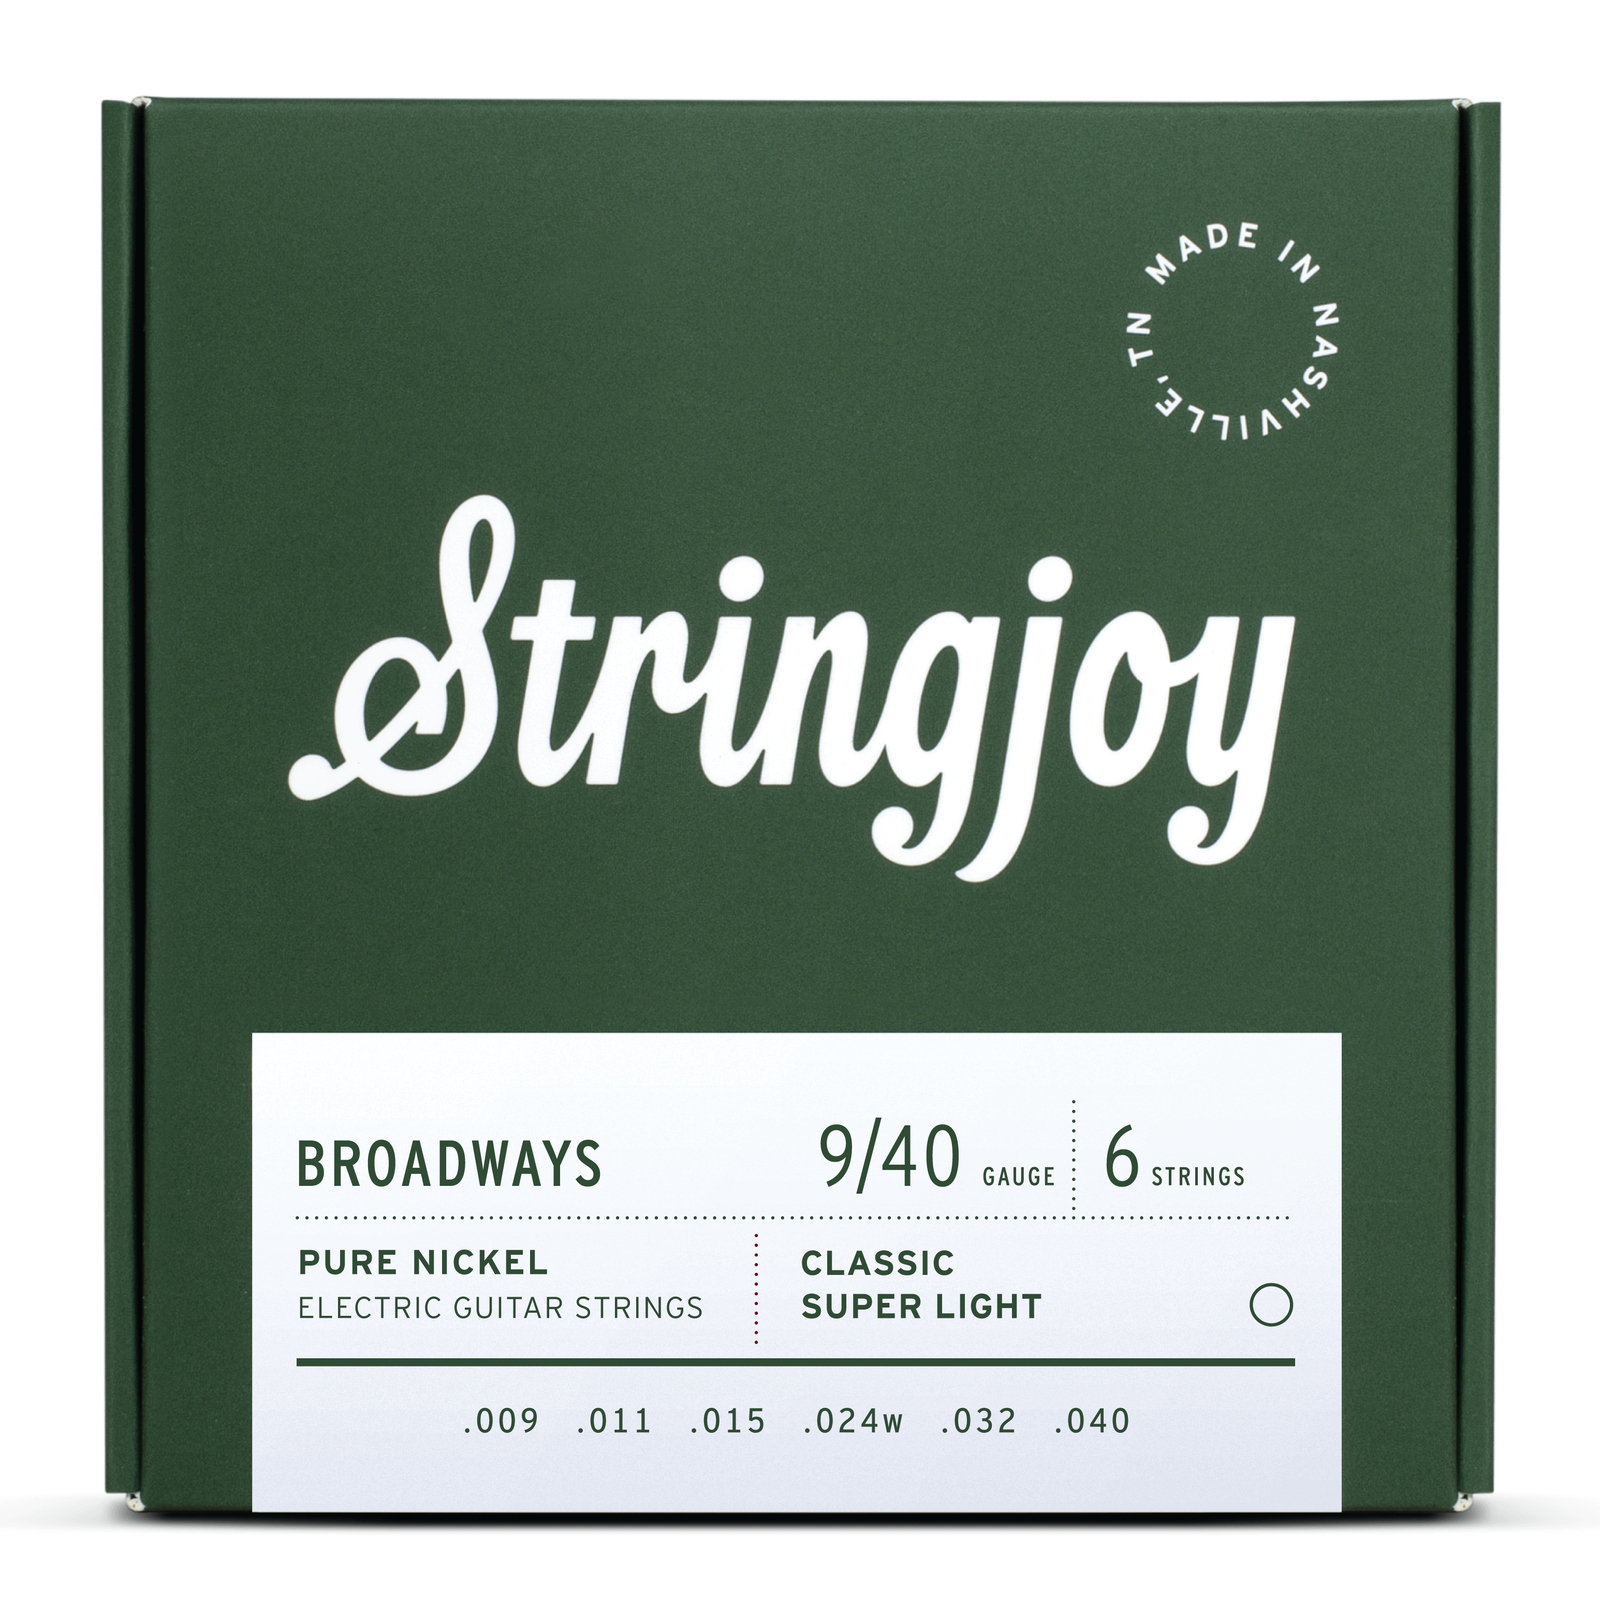 Stringjoy Broadways Classic Super Light Gauge (9-40) Pure Nickel Electric Guitar Strings